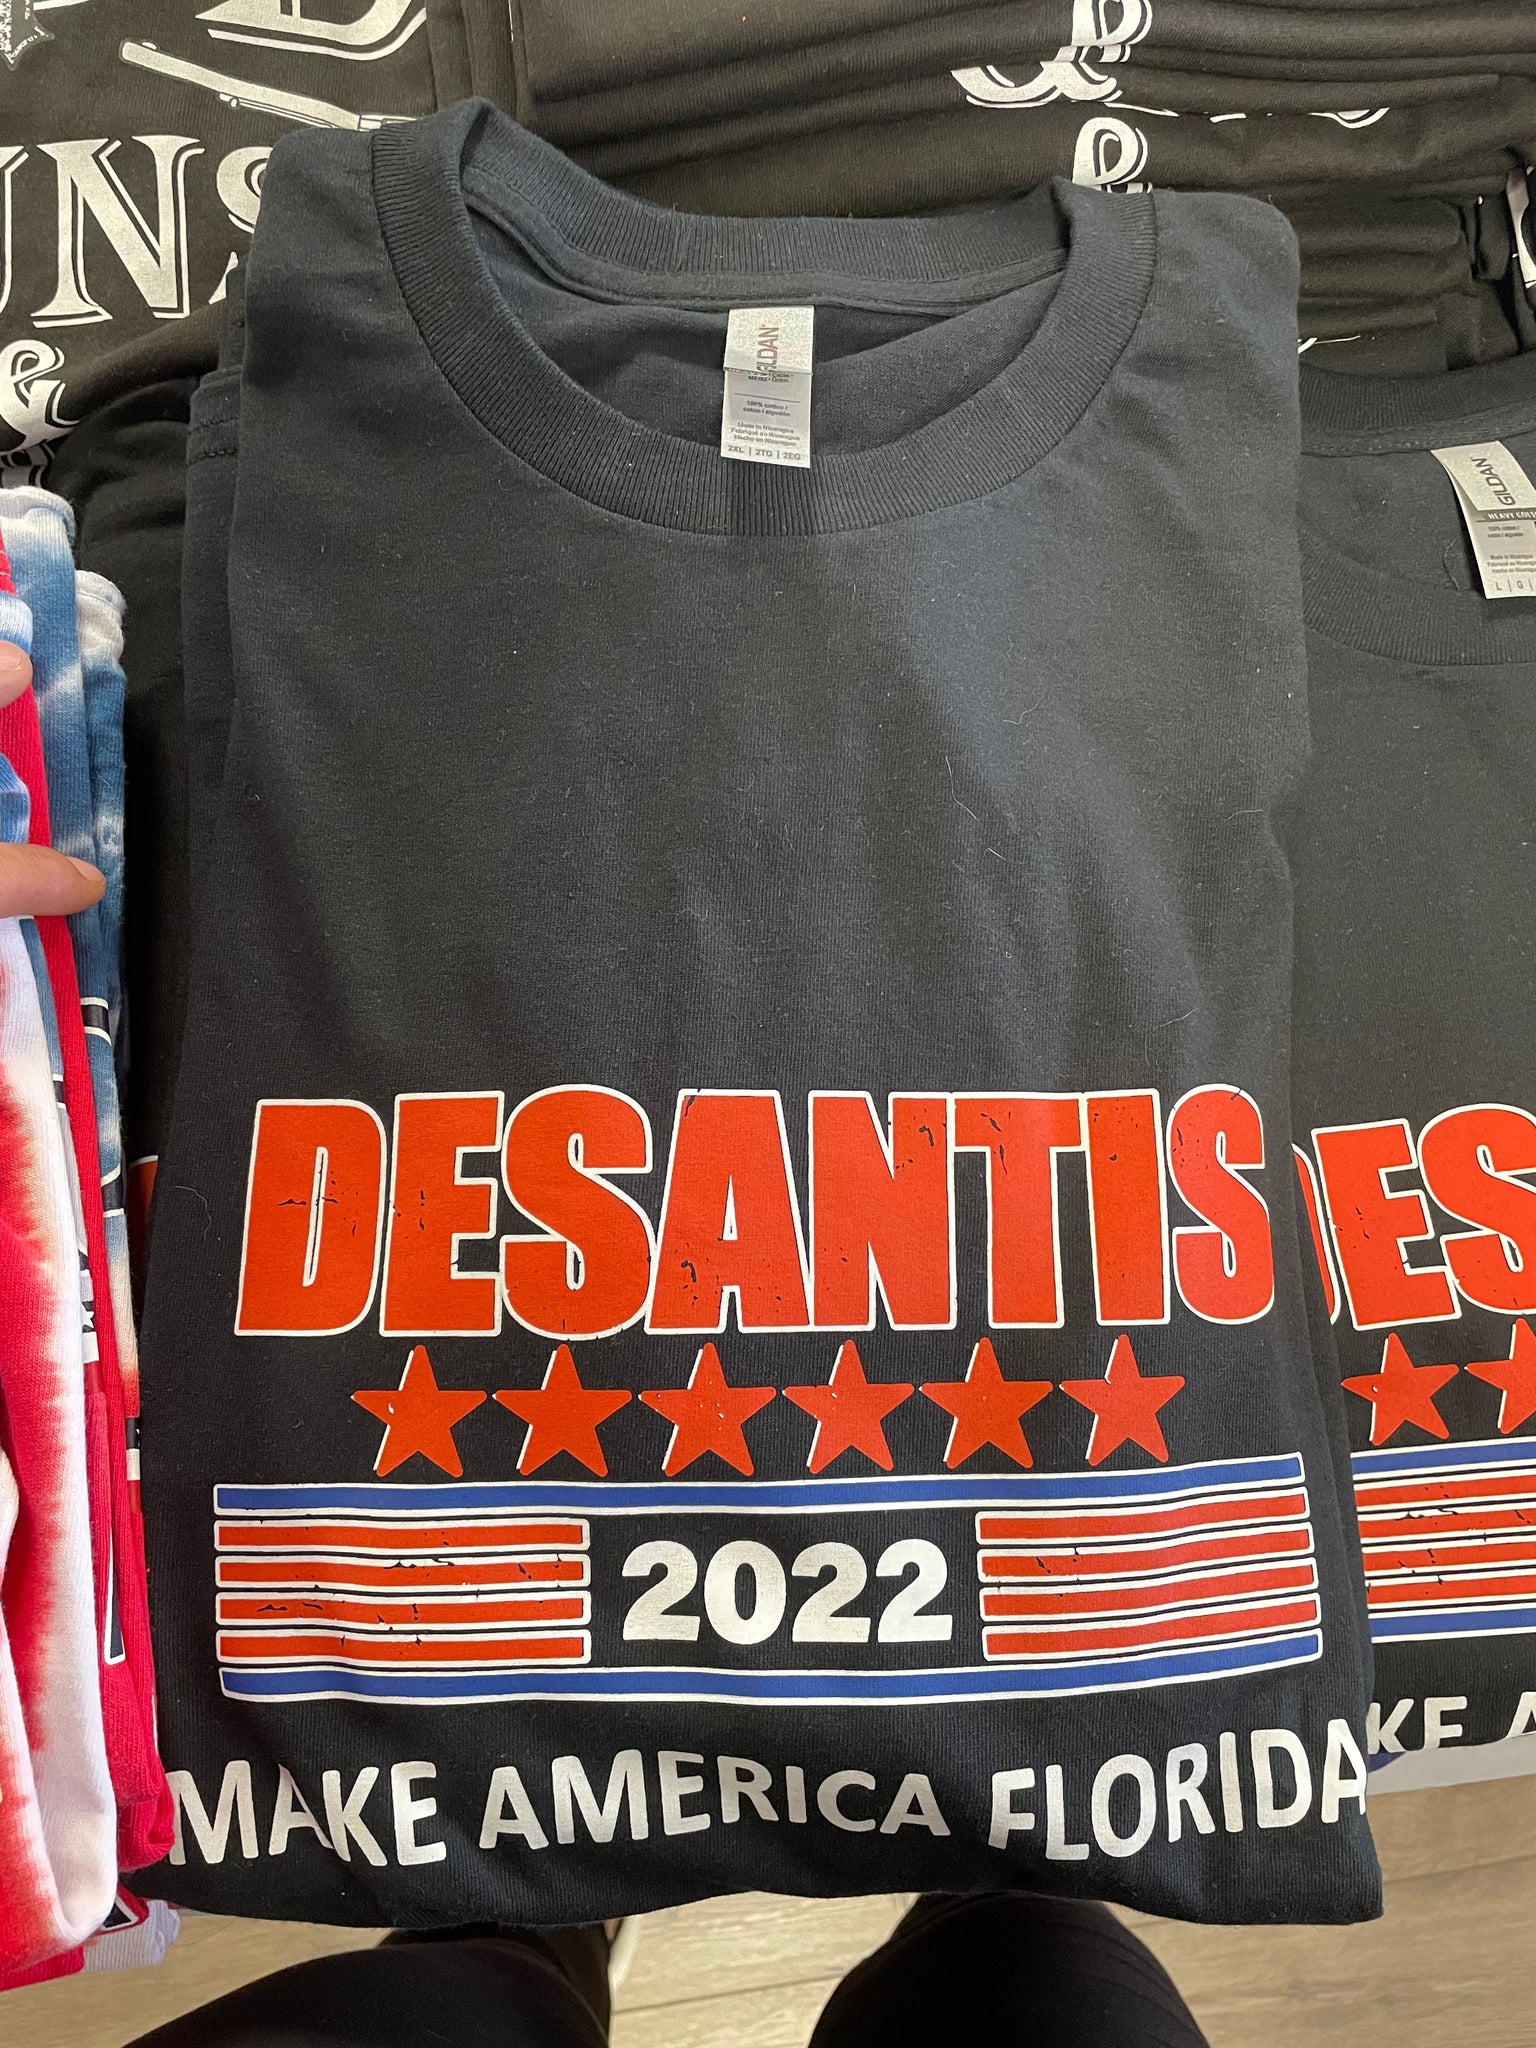 DeSantis 2022 “Make America Florida”